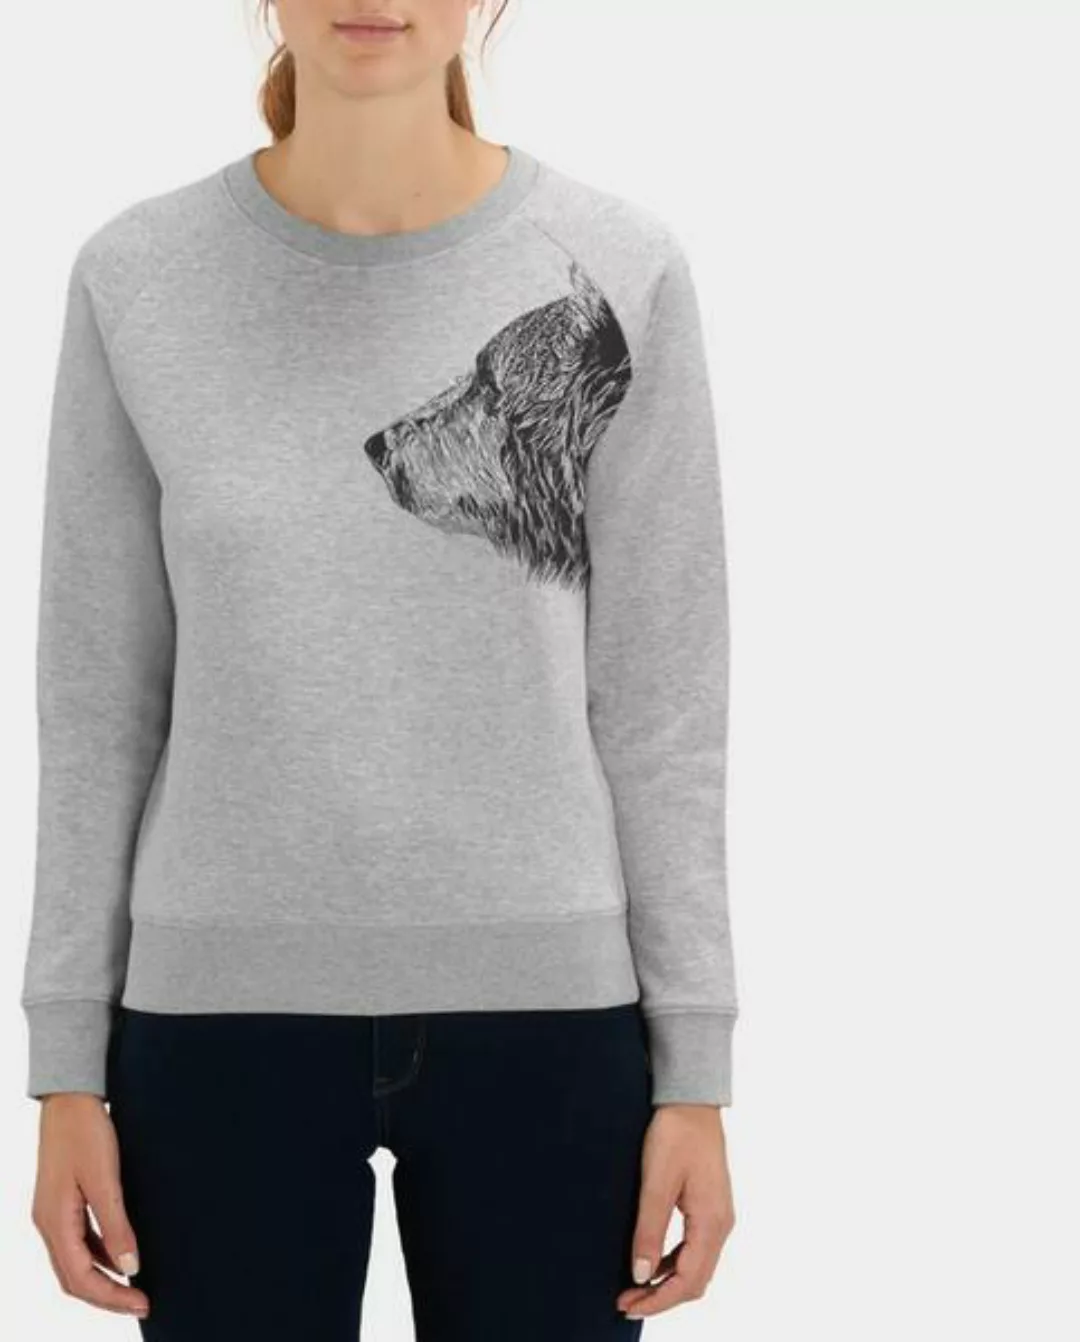 Damen Sweatshirt Bruder Bär günstig online kaufen